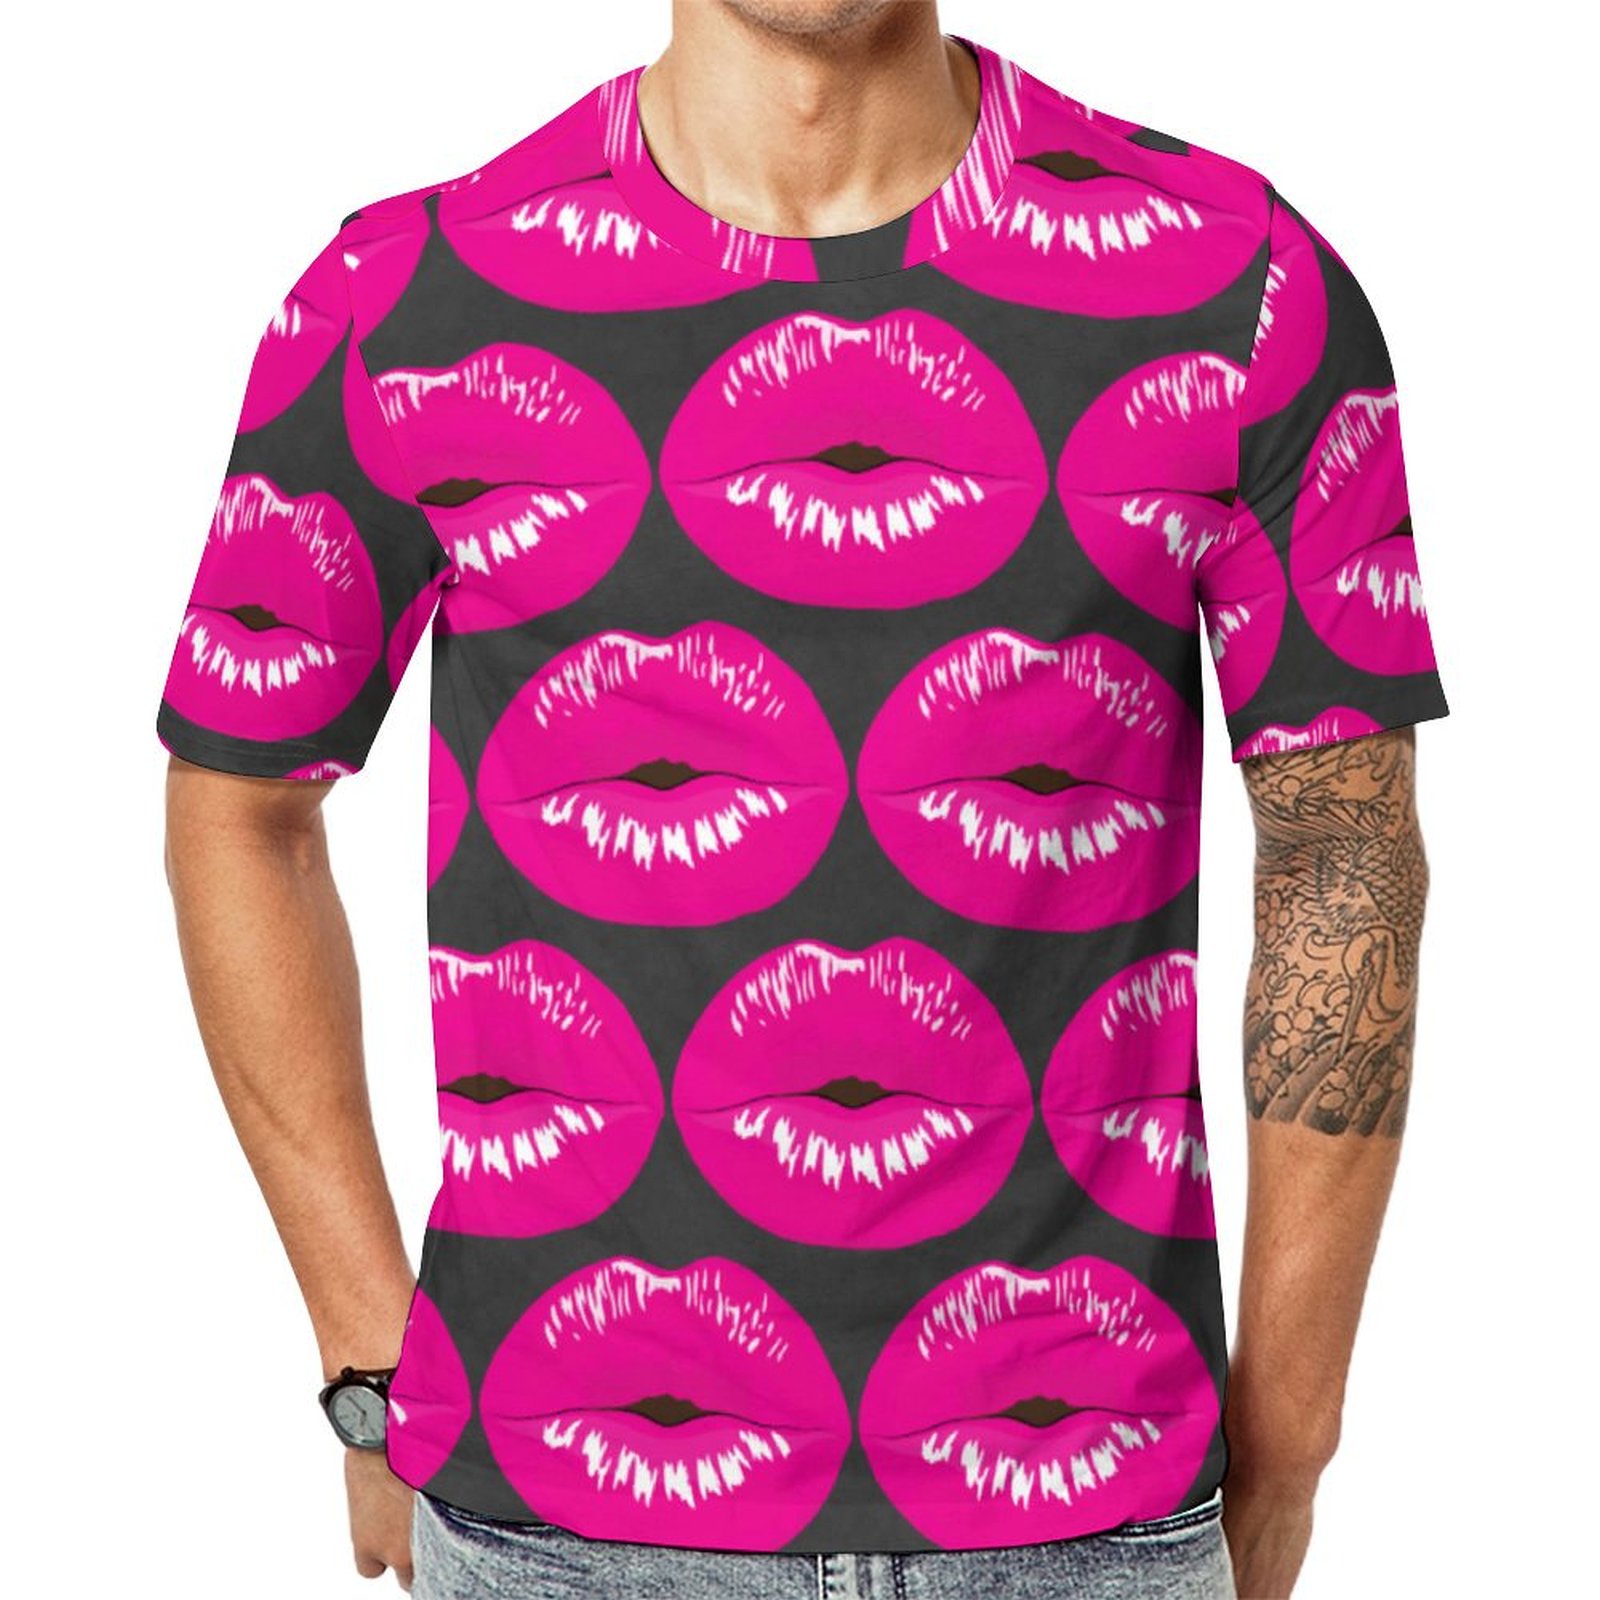 Hot Pink Lips Glamorous Girl Short Sleeve Print Unisex Tshirt Summer Casual Tees for Men and Women Coolcoshirts